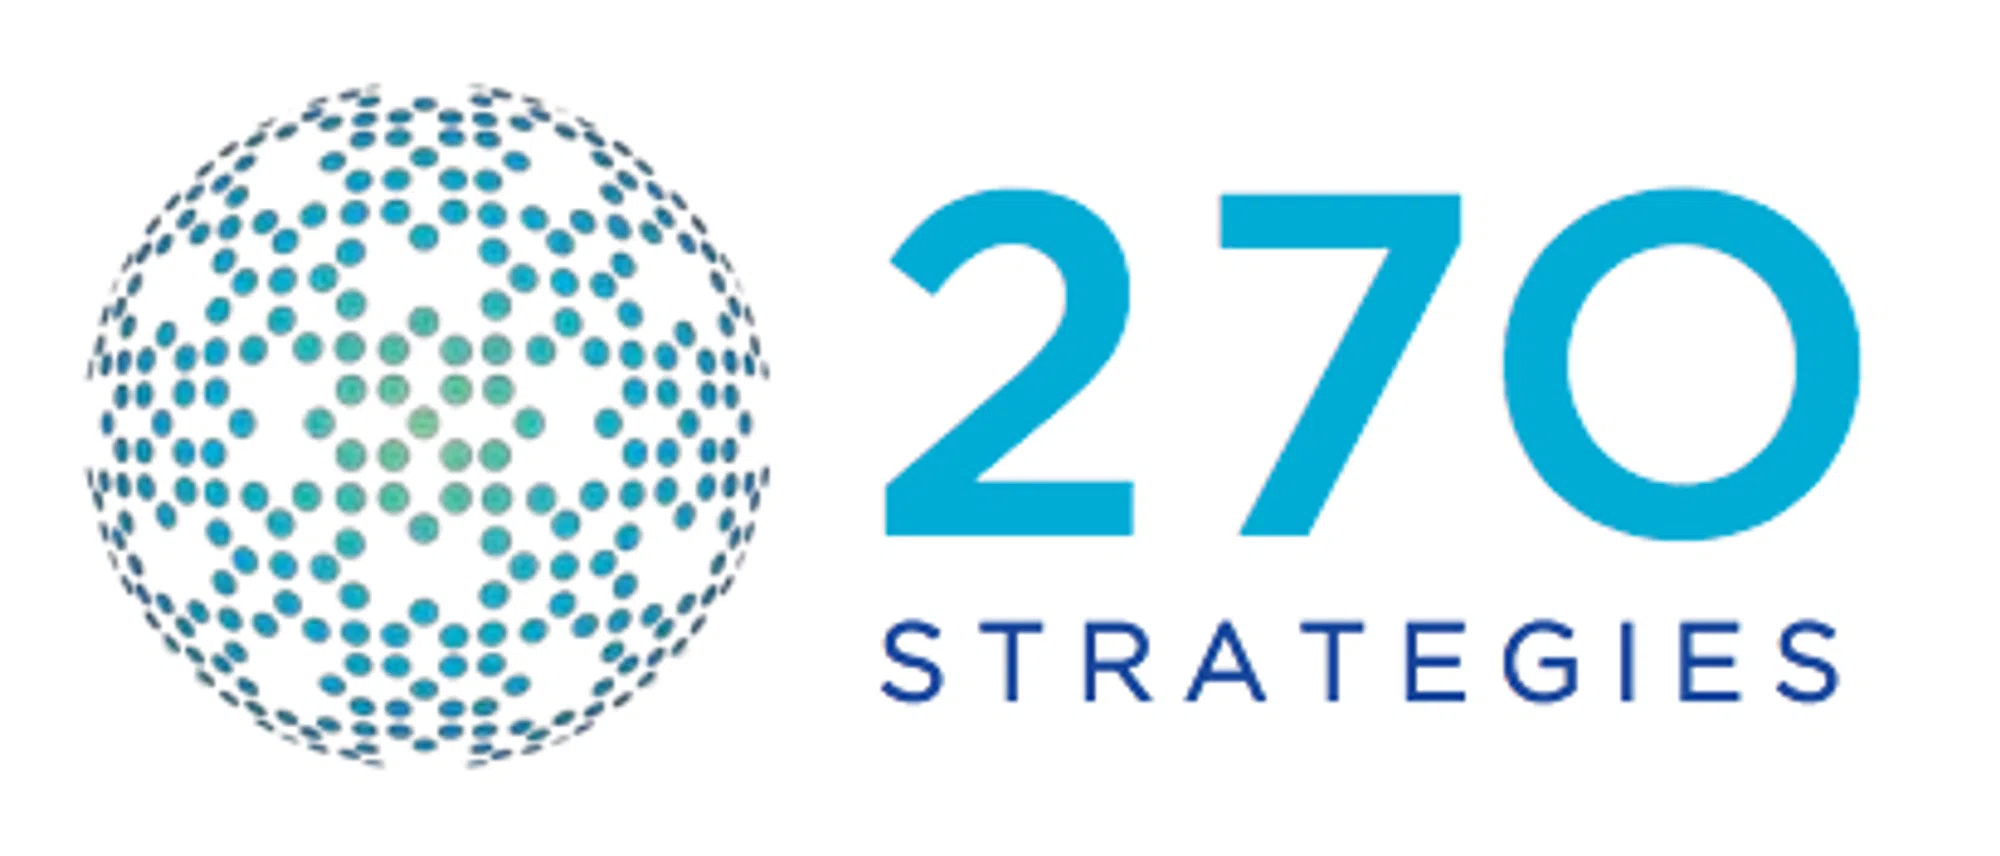 270 Strategies